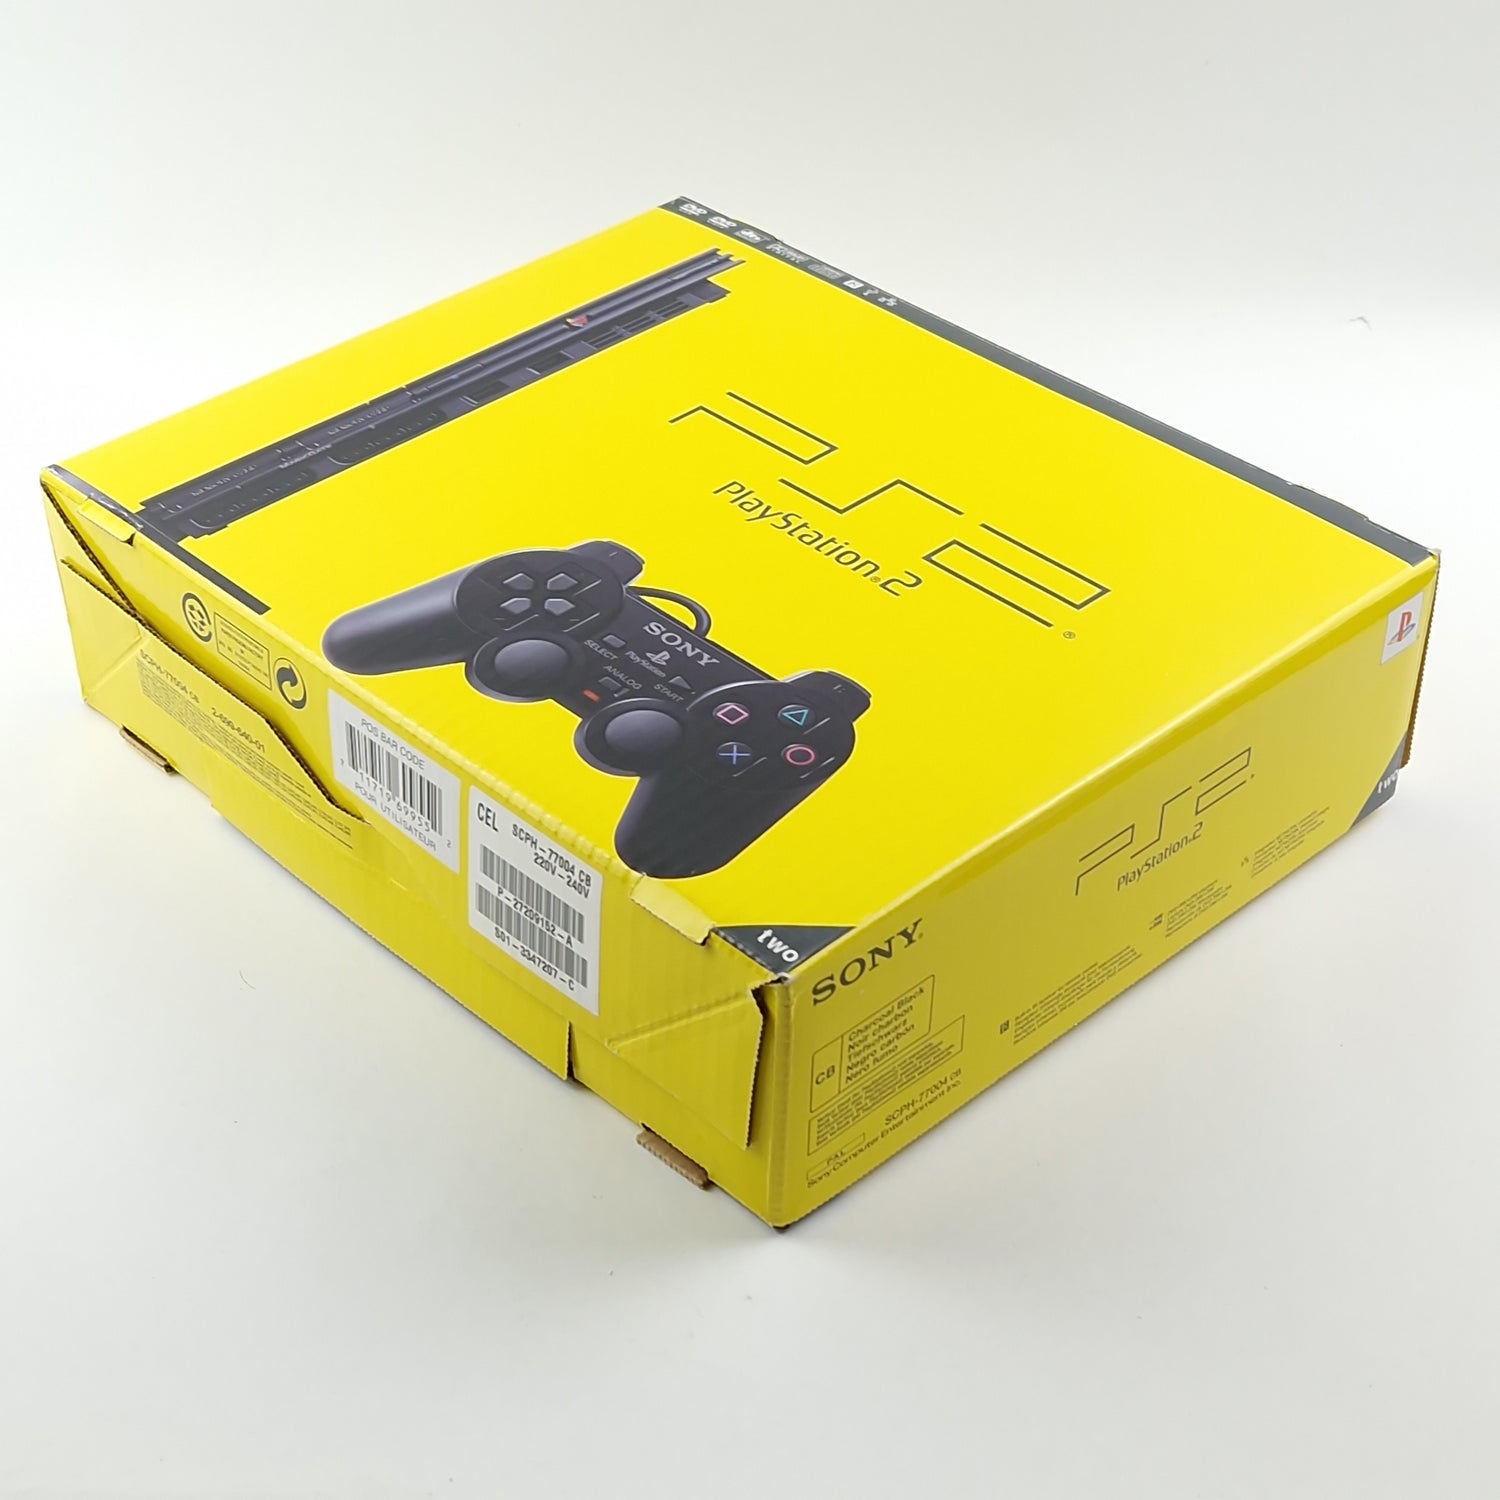 Playstation 2 Konsole : PS2 Singstar Apres Ski Party Bundle Set - Console OVP